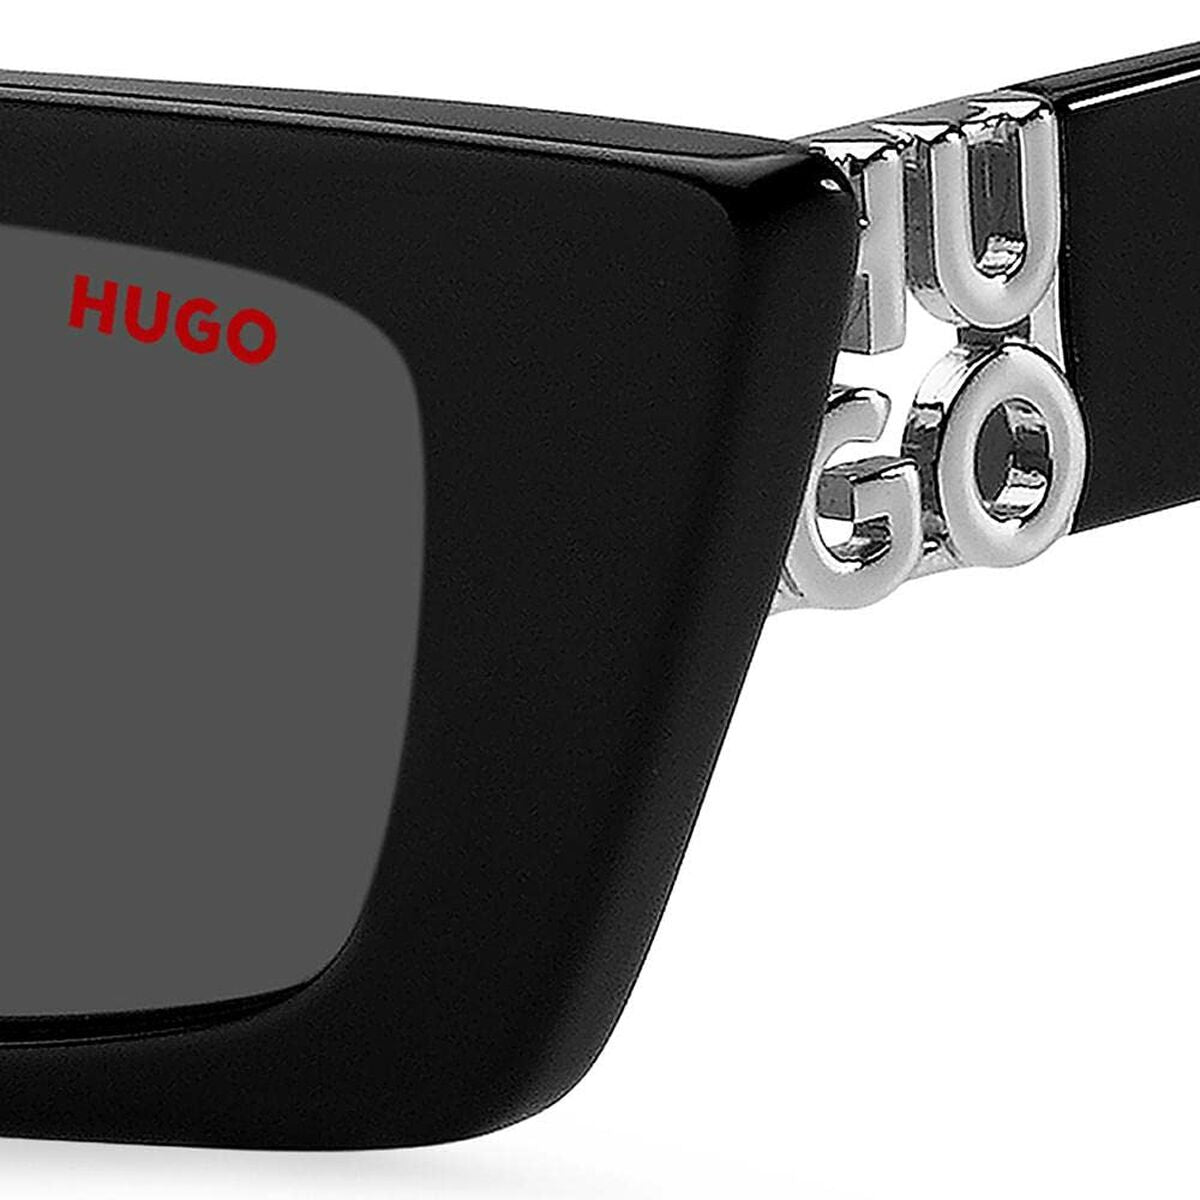 Kaufe Damensonnenbrille Hugo Boss HG 1256_S bei AWK Flagship um € 193.00